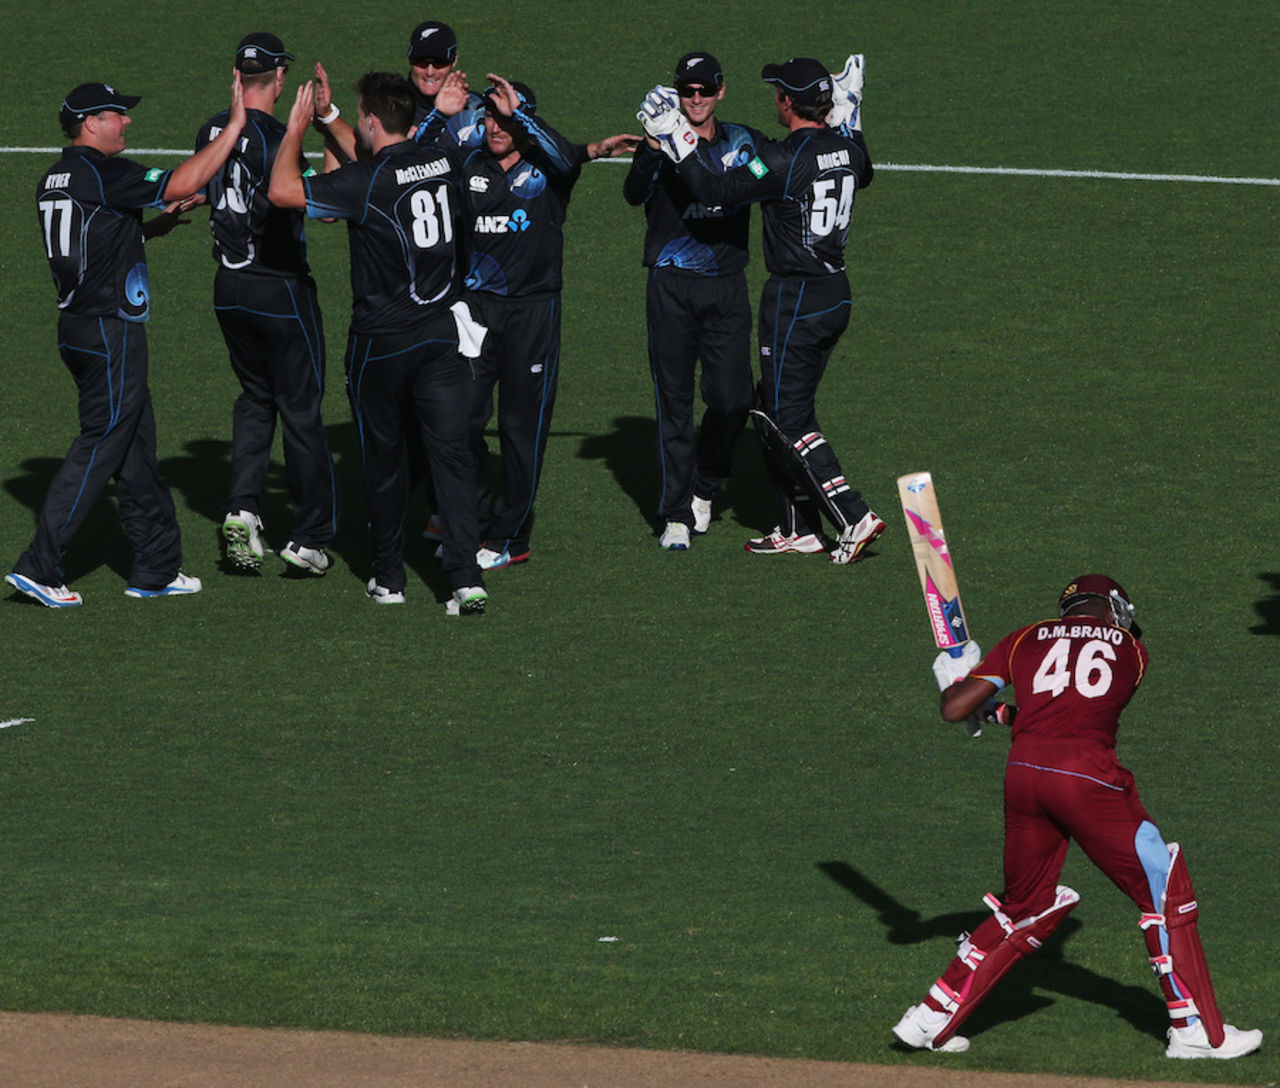 New Zealand celebrate Darren Bravo's dismissal, New Zealand v West Indies, 1st ODI, Auckland, December 26, 2013